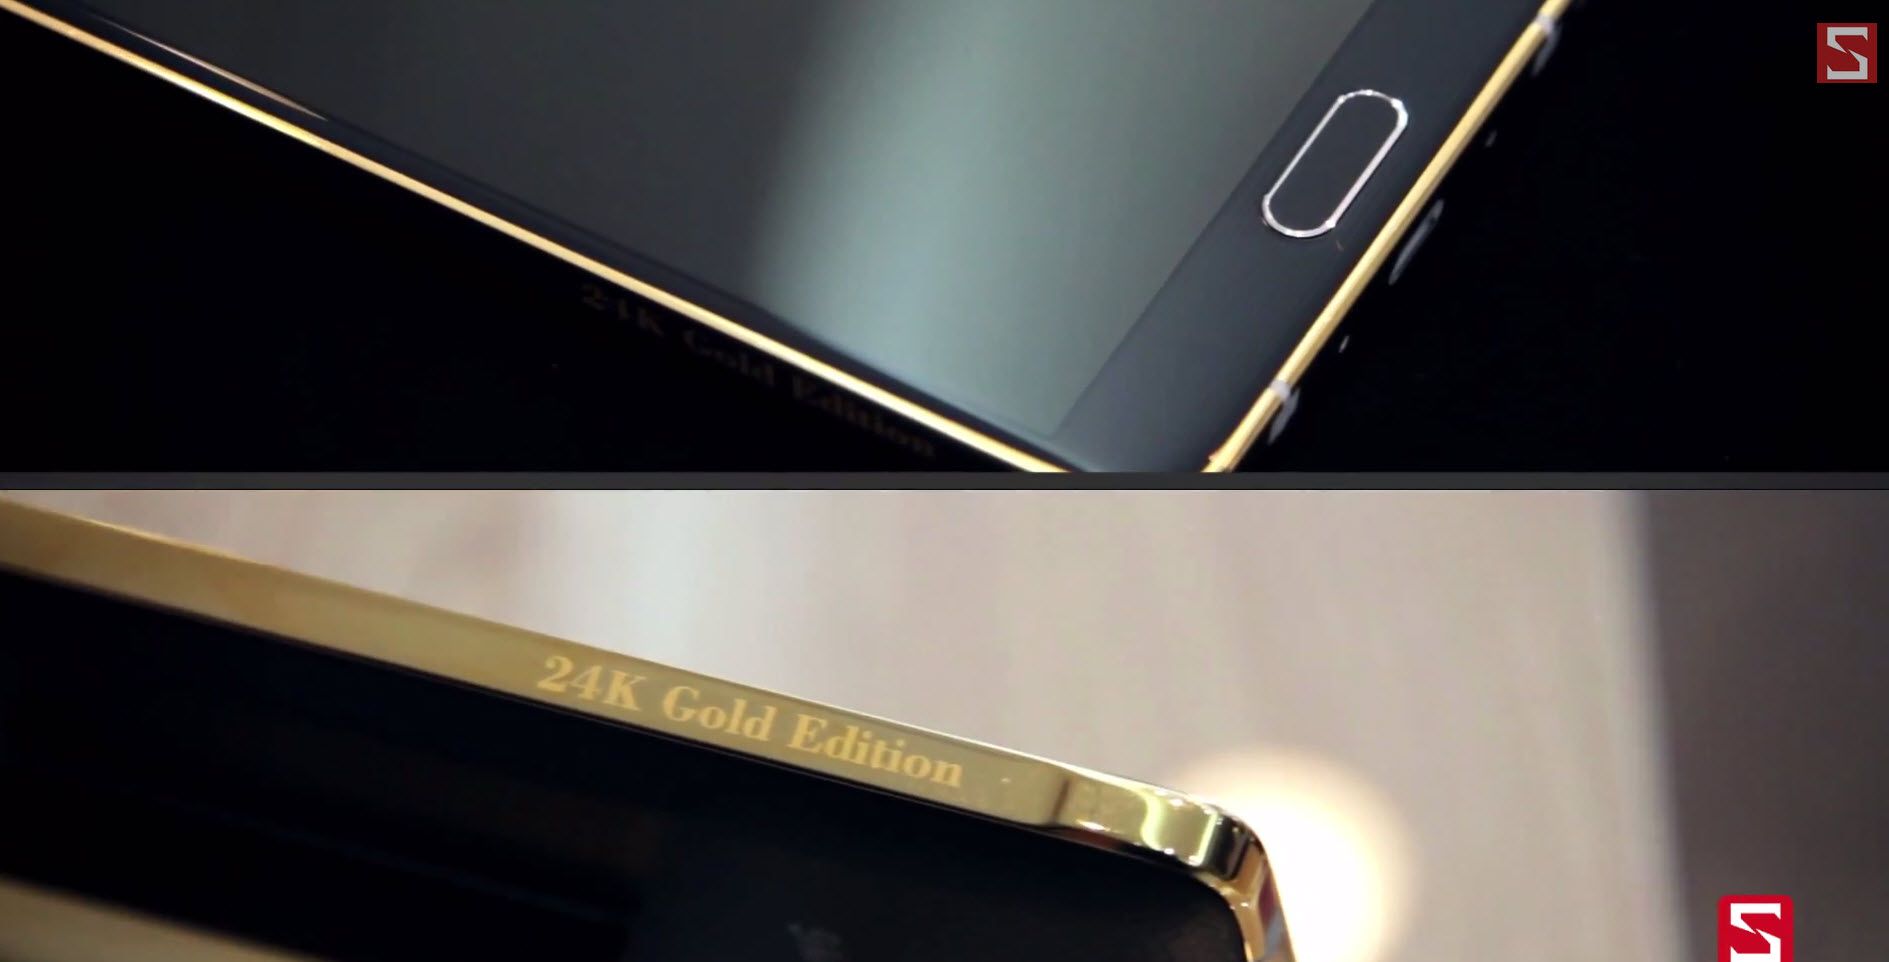 Galaxy-Note-4-Gold-Edition.jpg